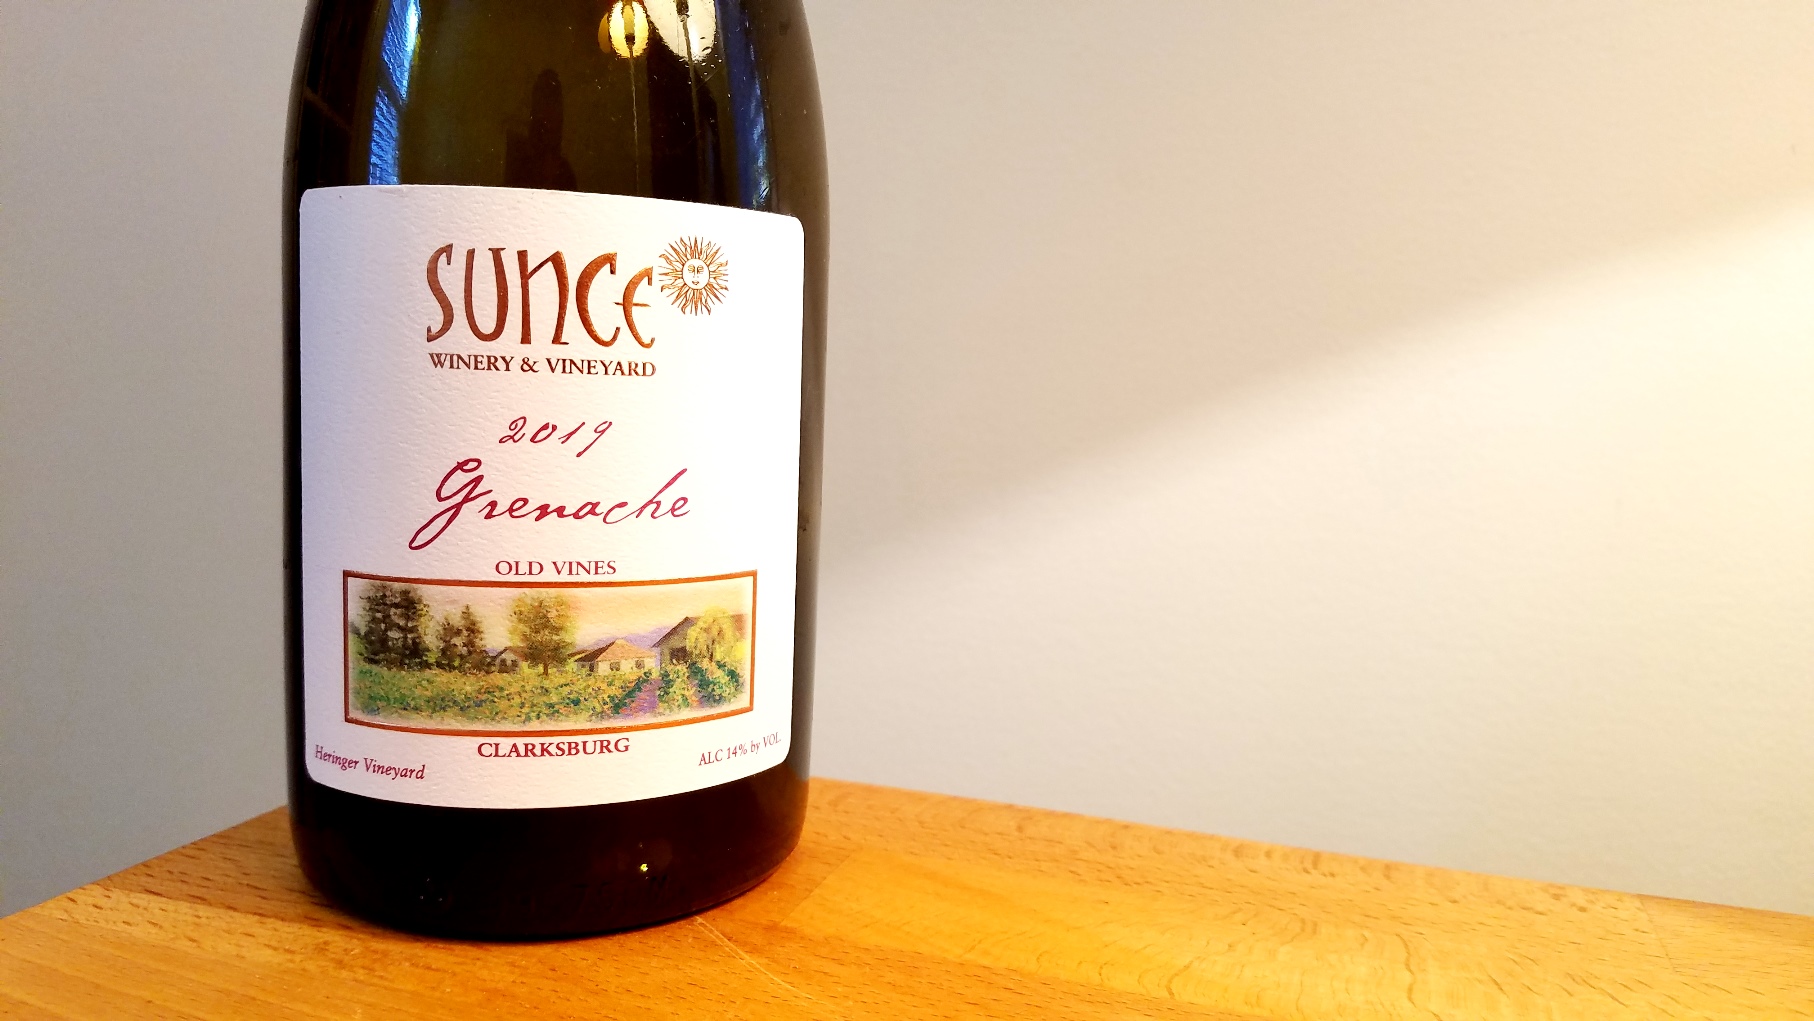 Sunce Winery & Vineyard, Old Vines Grenache 2019, Clarksburg, Heringer Vineyard, California, Wine Casual